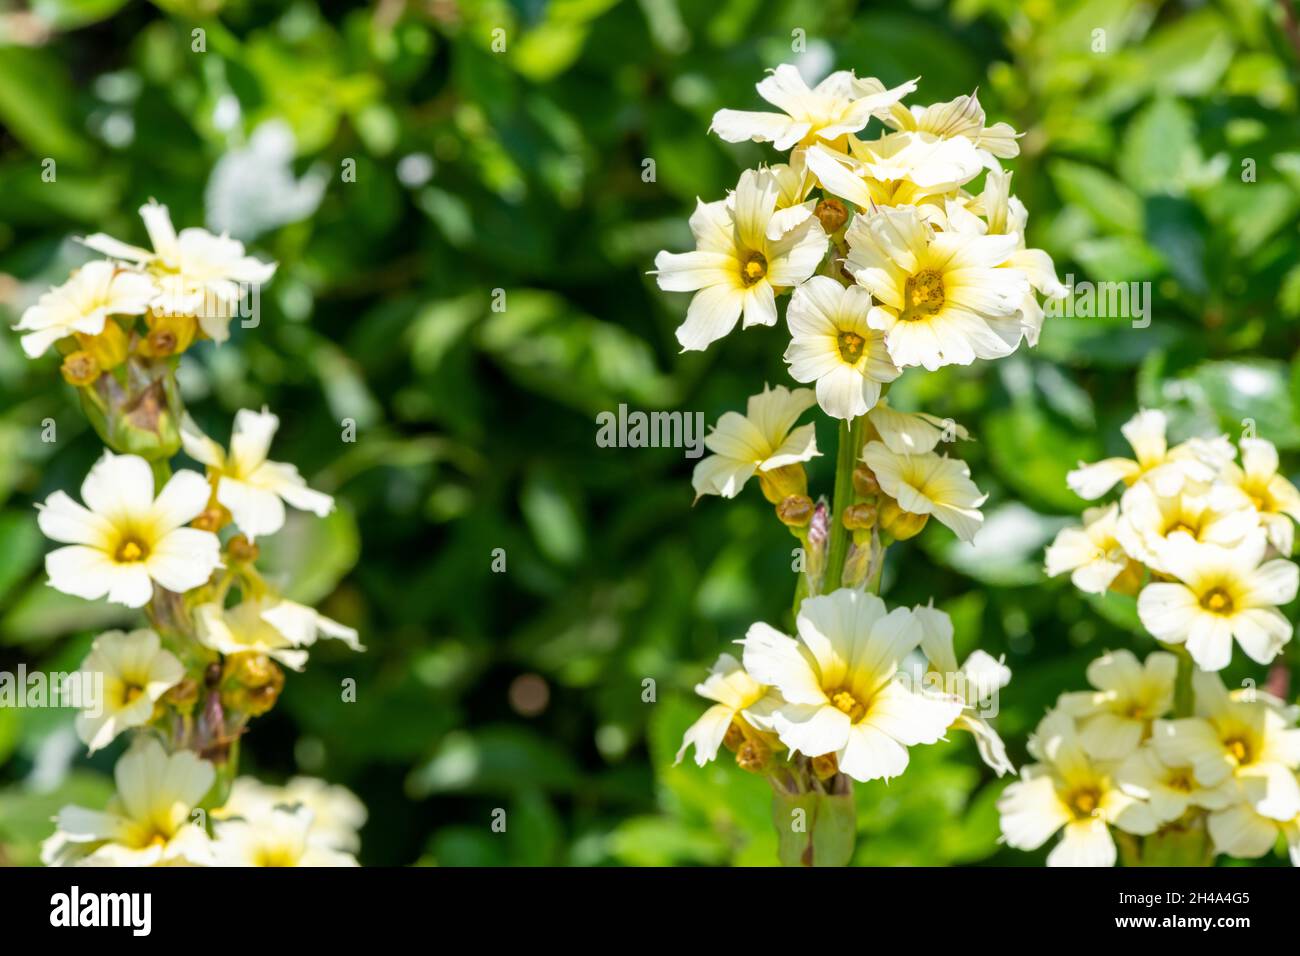 Close up of saitn flowers (sisyrinchium striatum) in bloom Stock Photo